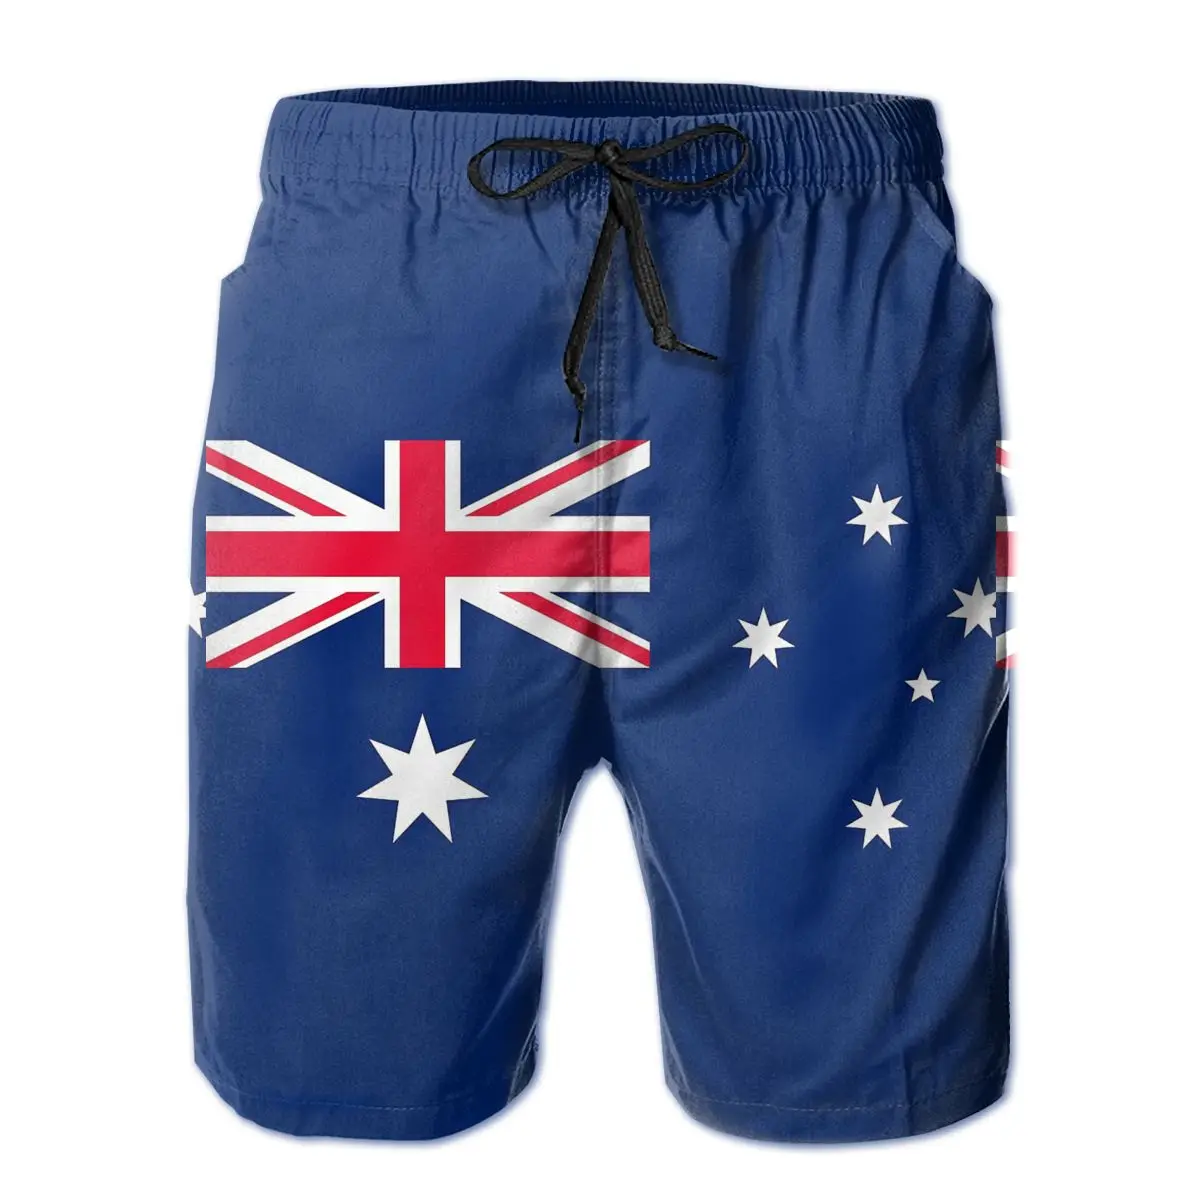 R333 Casual Australian Flag Australia Patriotic Shorts Breathable Quick Dry Humor Graphic Male Shorts maamgic sweat shorts Casual Shorts